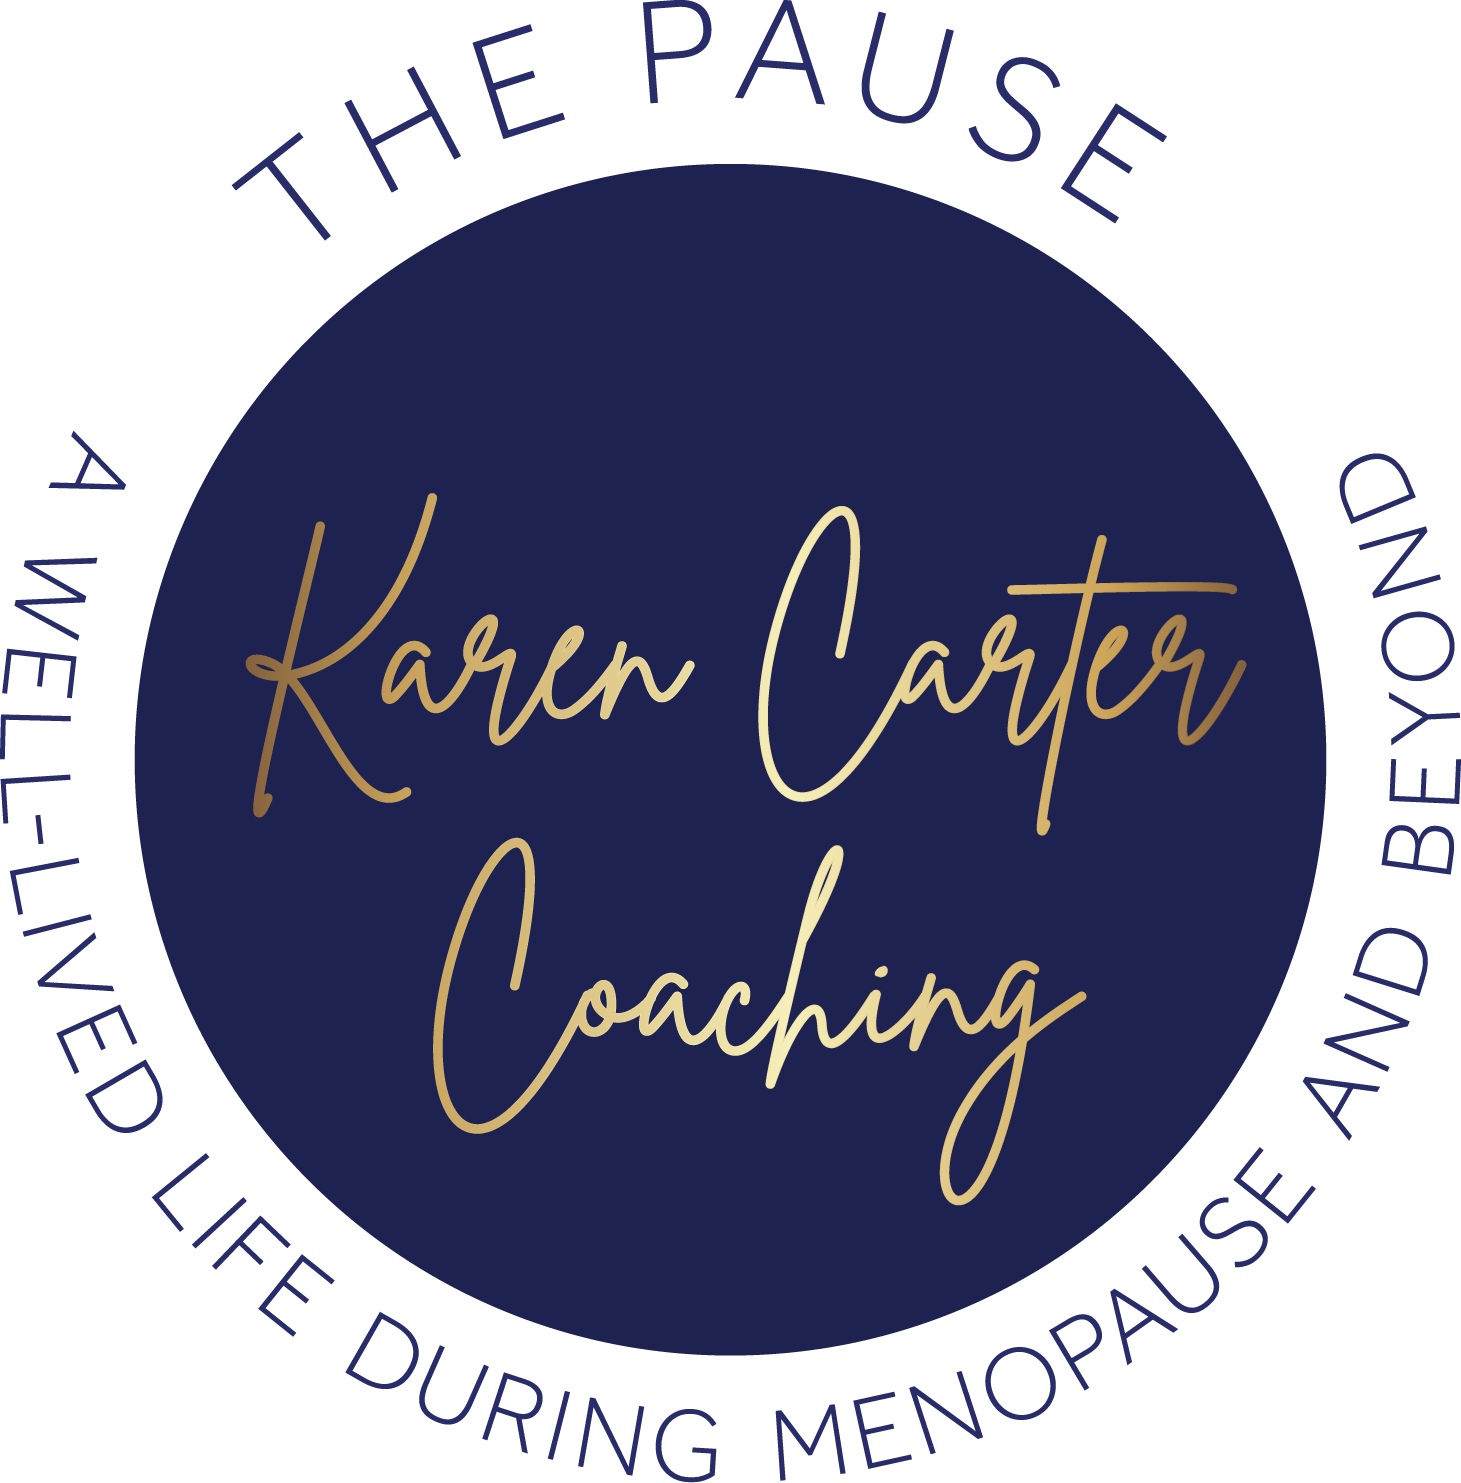 Karen Carter Coaching